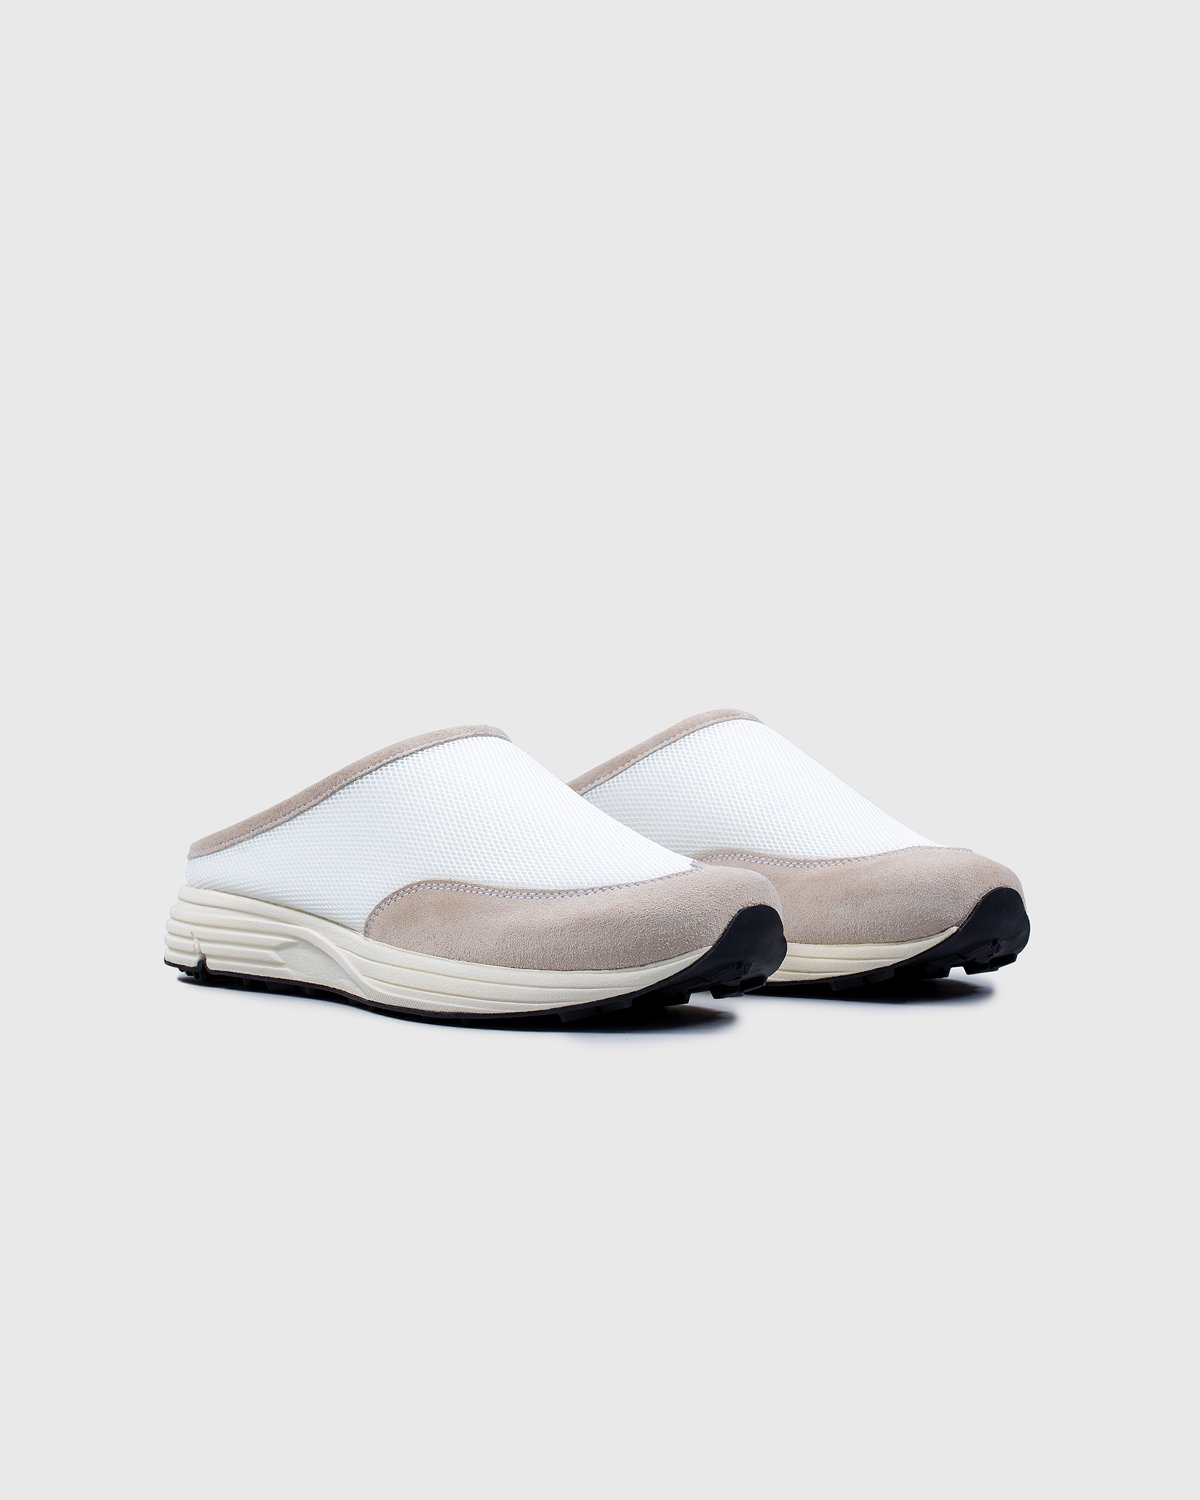 Diemme - Maggiore White Mesh - Footwear - White - Image 2